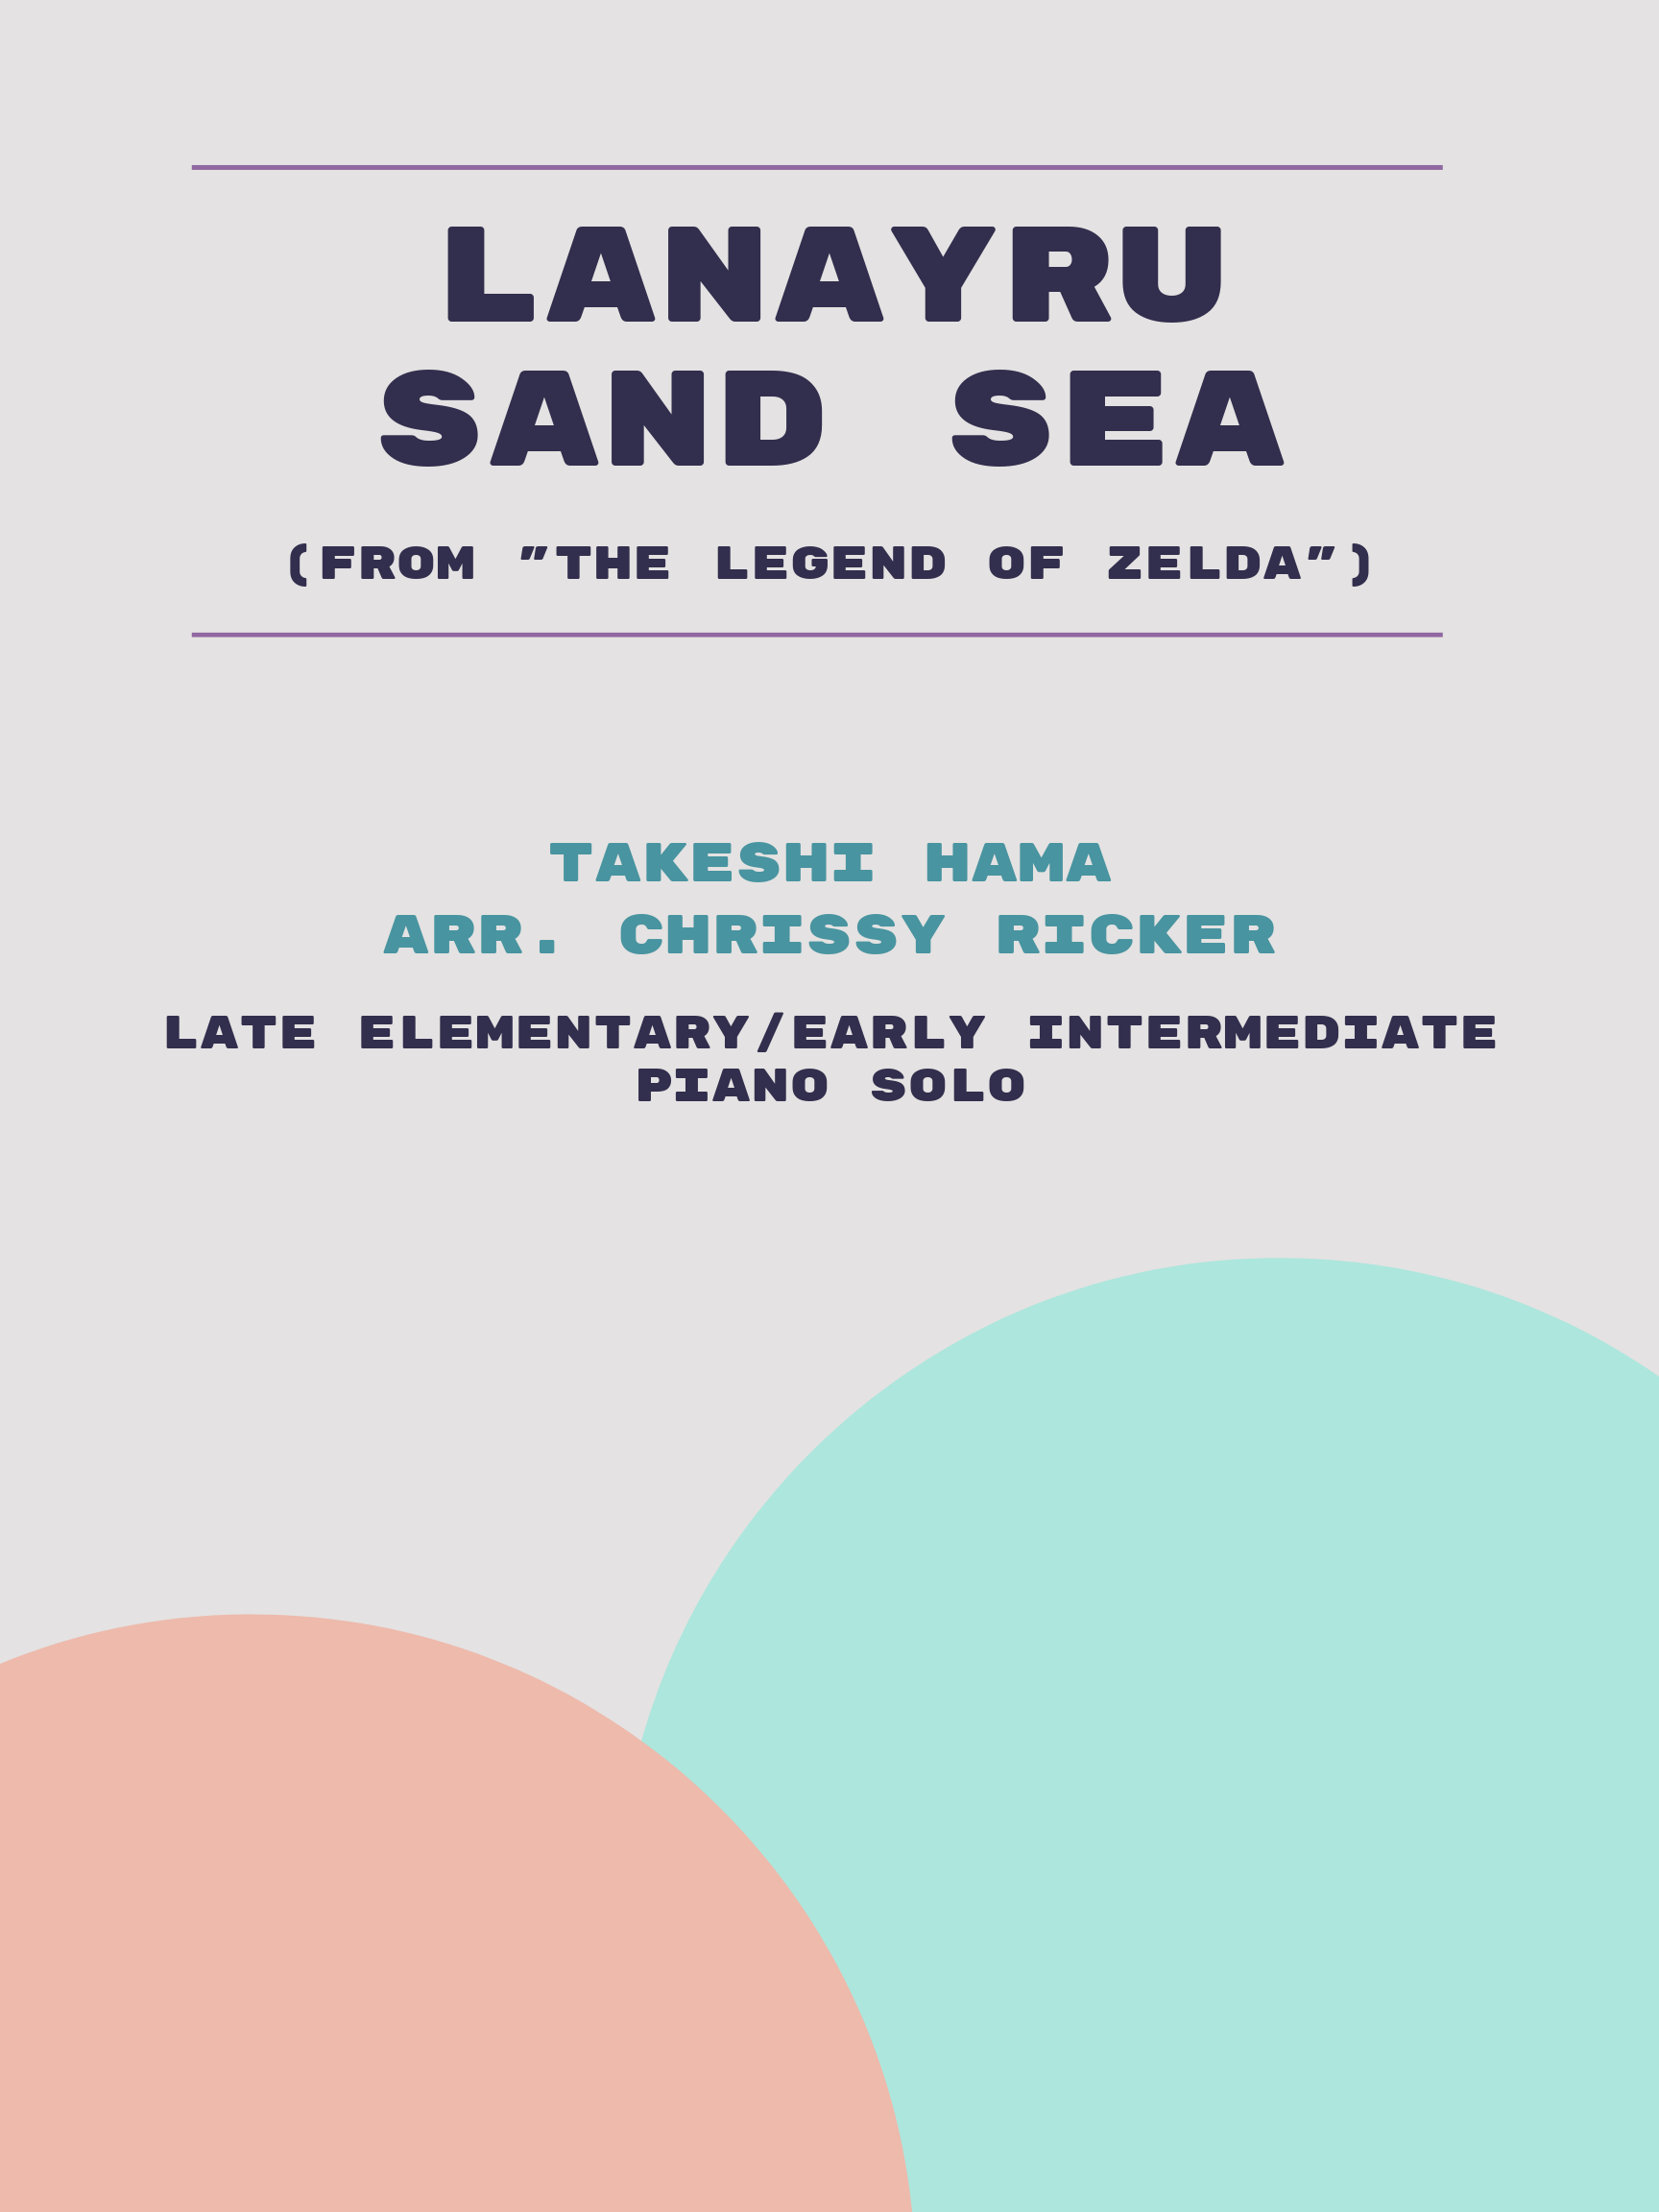 Lanayru Sand Sea by Takeshi Hama